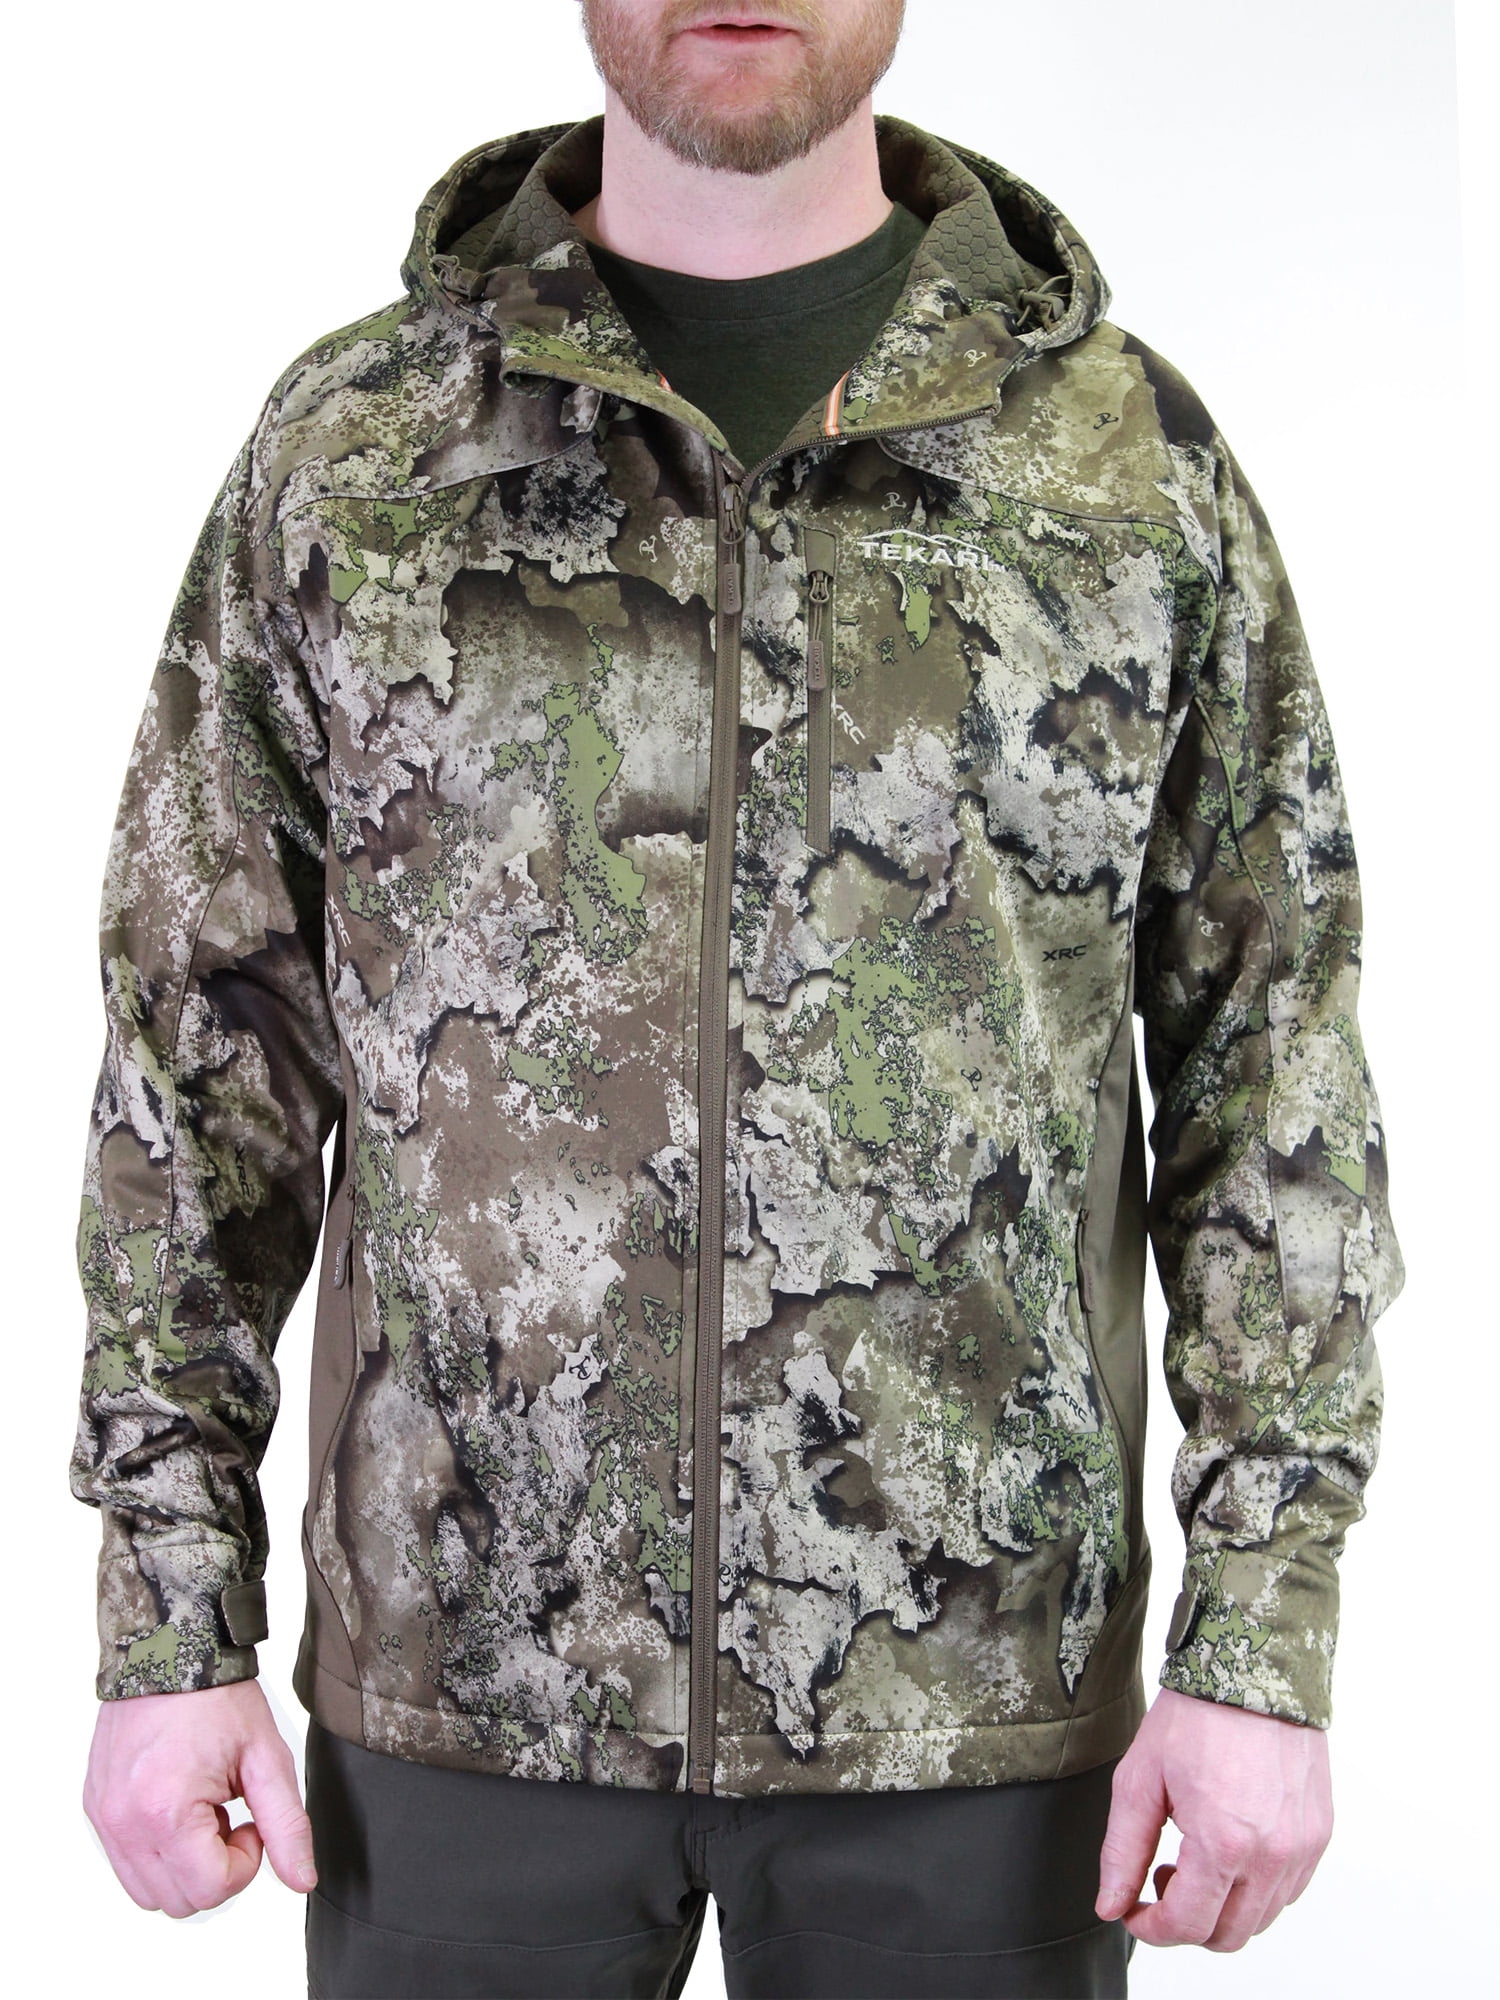 TrueTimber Tekari StrideFlex Full Zip Hooded Jacket - XRC Camo, 3XL, Adult Unisex, Multicolor